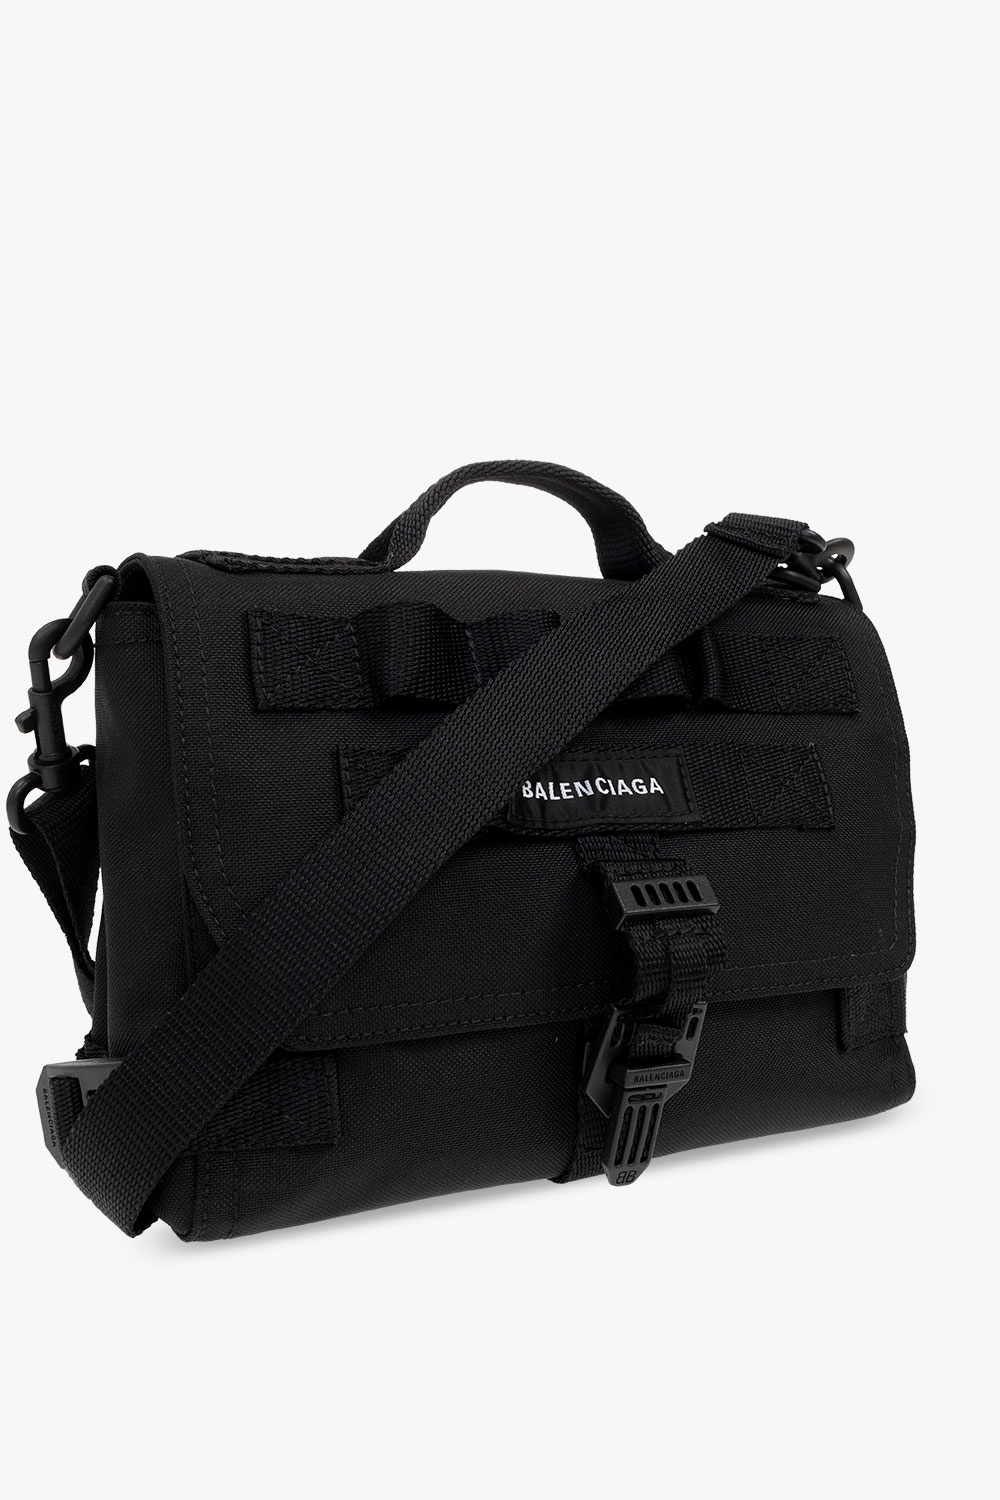 Black 'Army' shoulder bag Balenciaga - Vitkac Canada